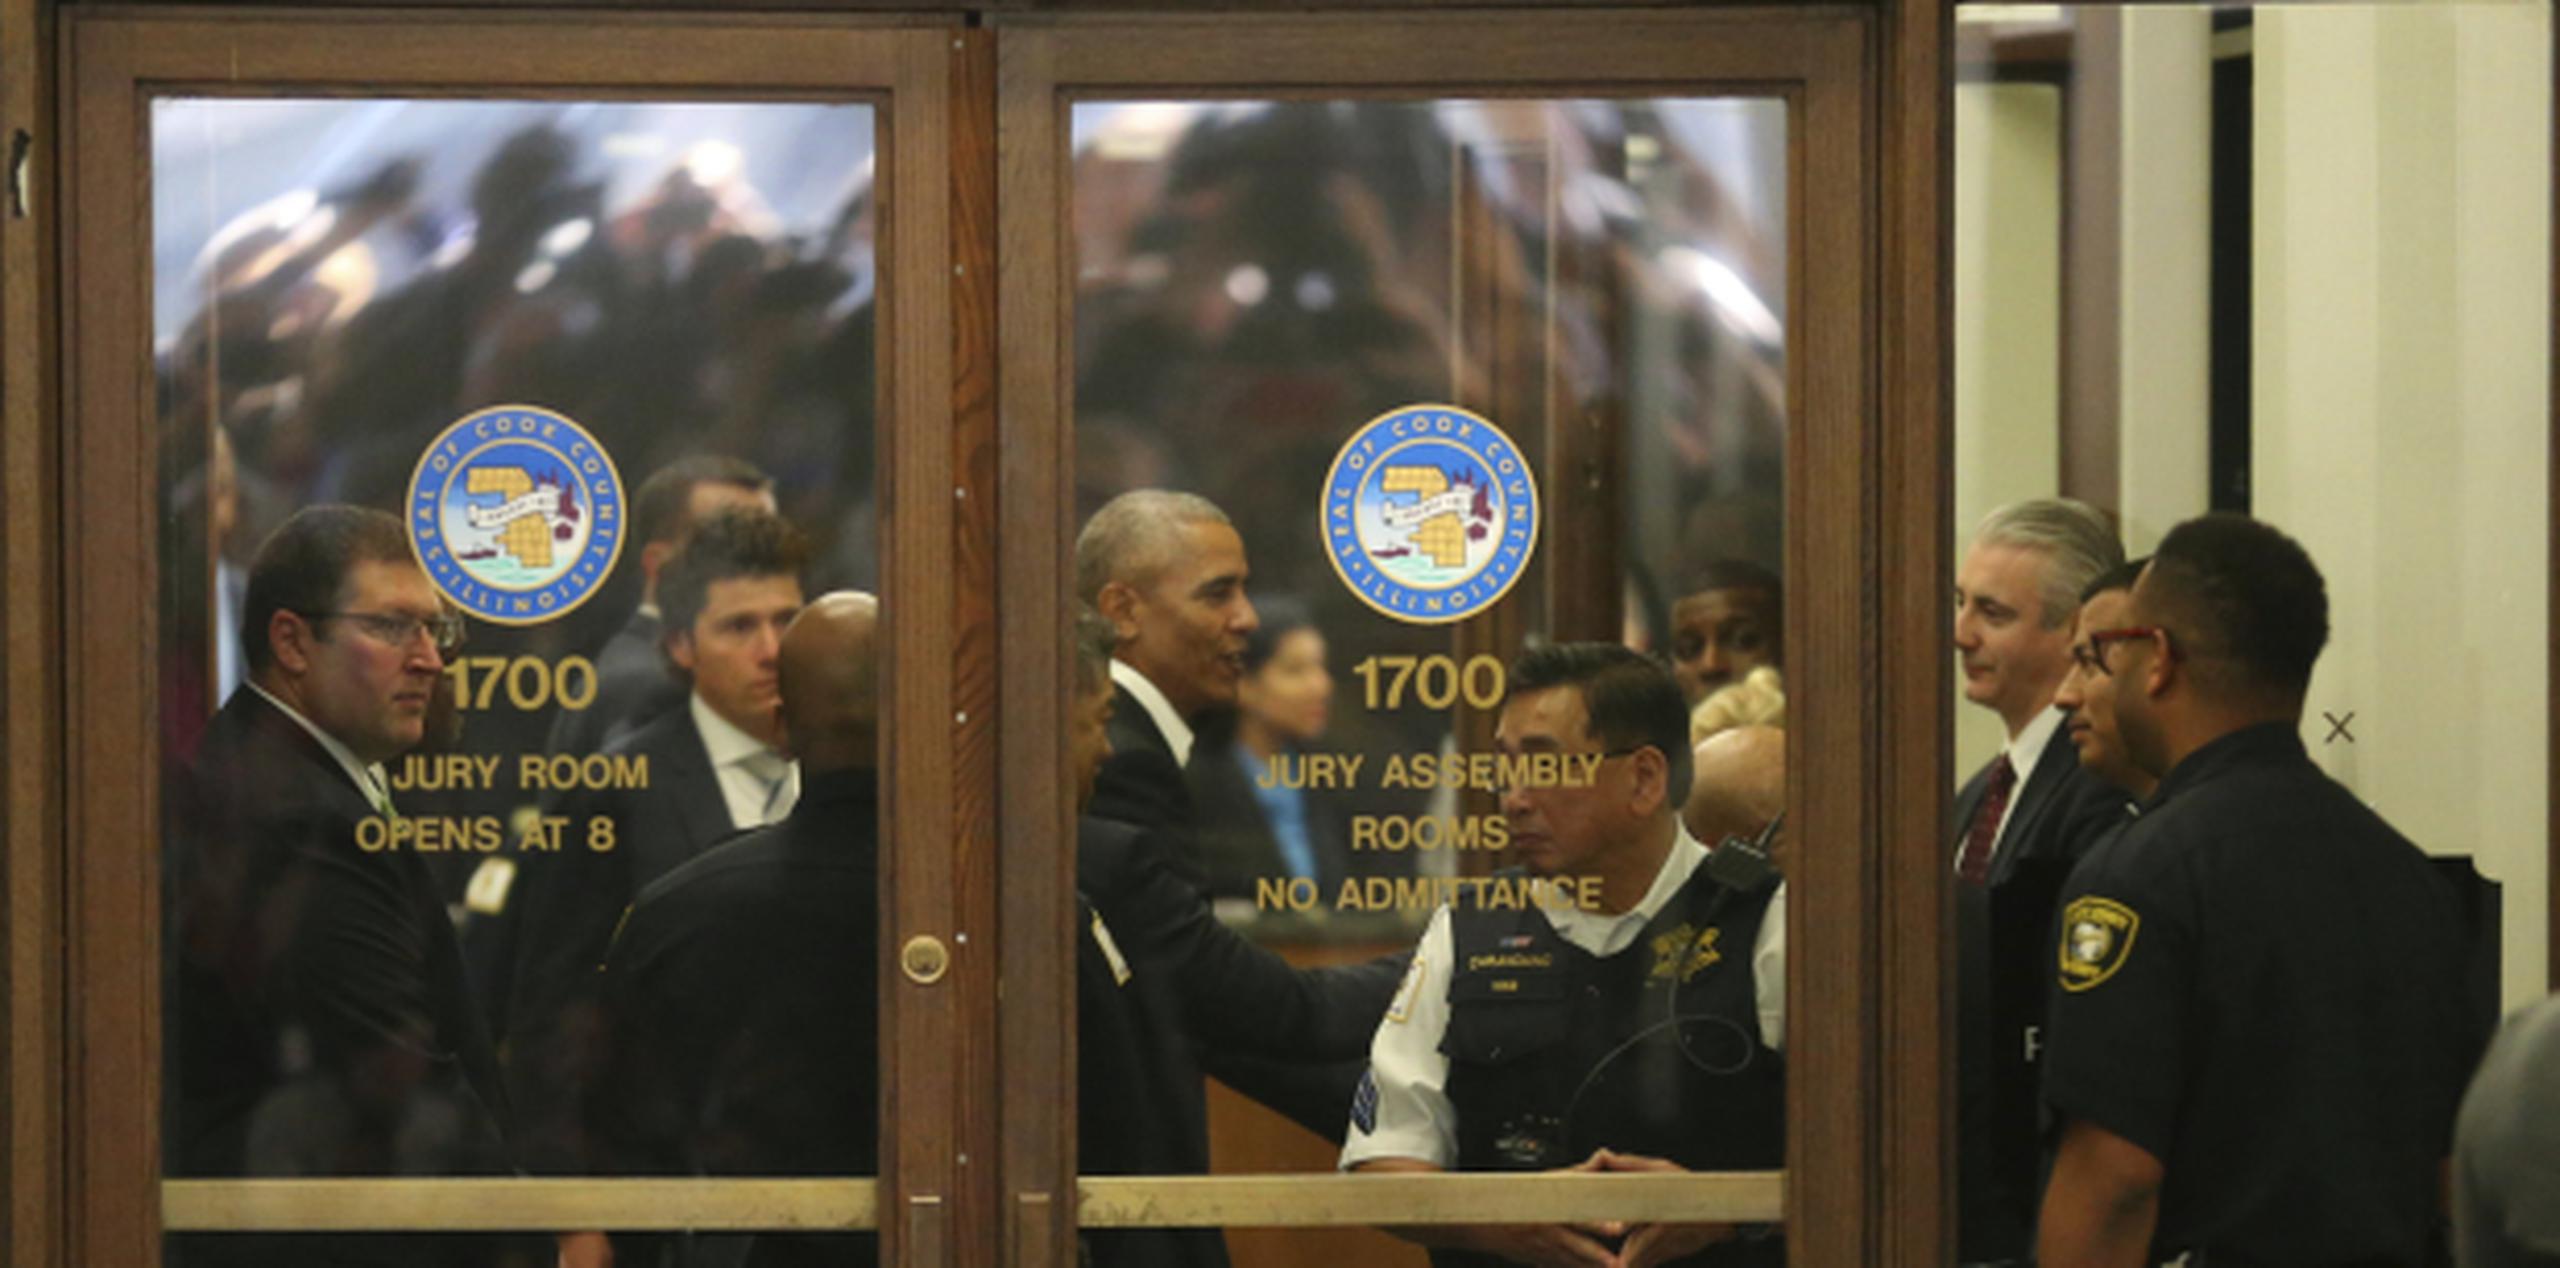 El expresidente Barack Obama saluda a su llegada al Daley Center de Chicago para servir como jurado. (Nancy Stone/Chicago Tribune via AP)
